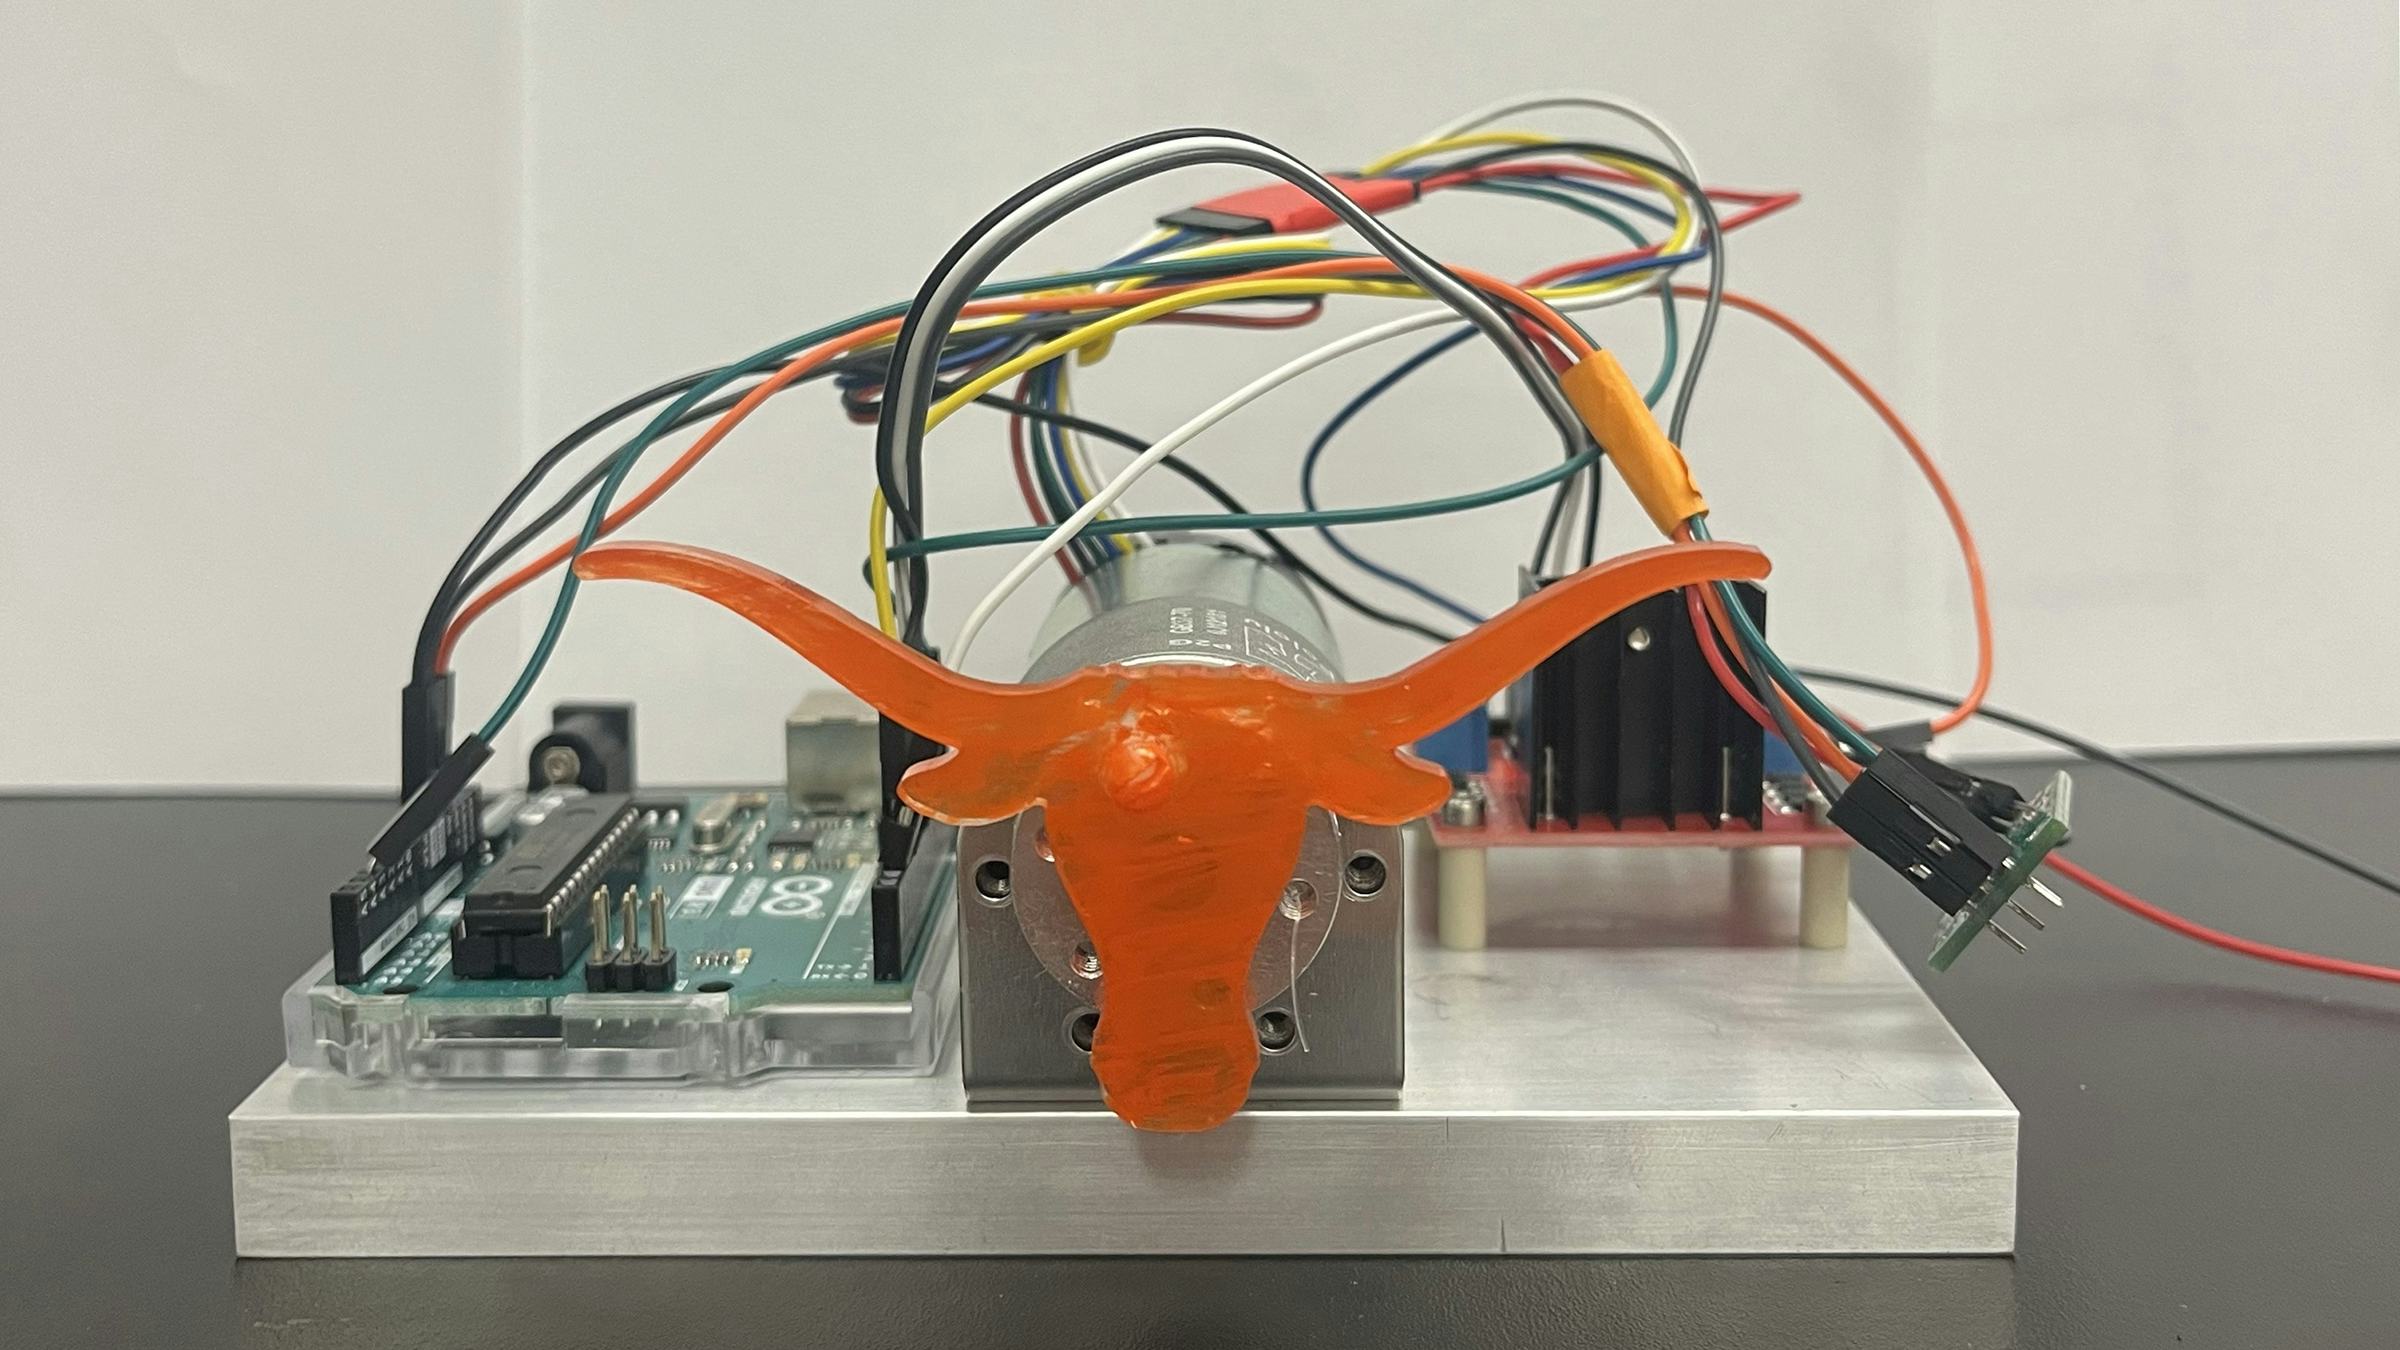 A motor with an orange longhorn logo 